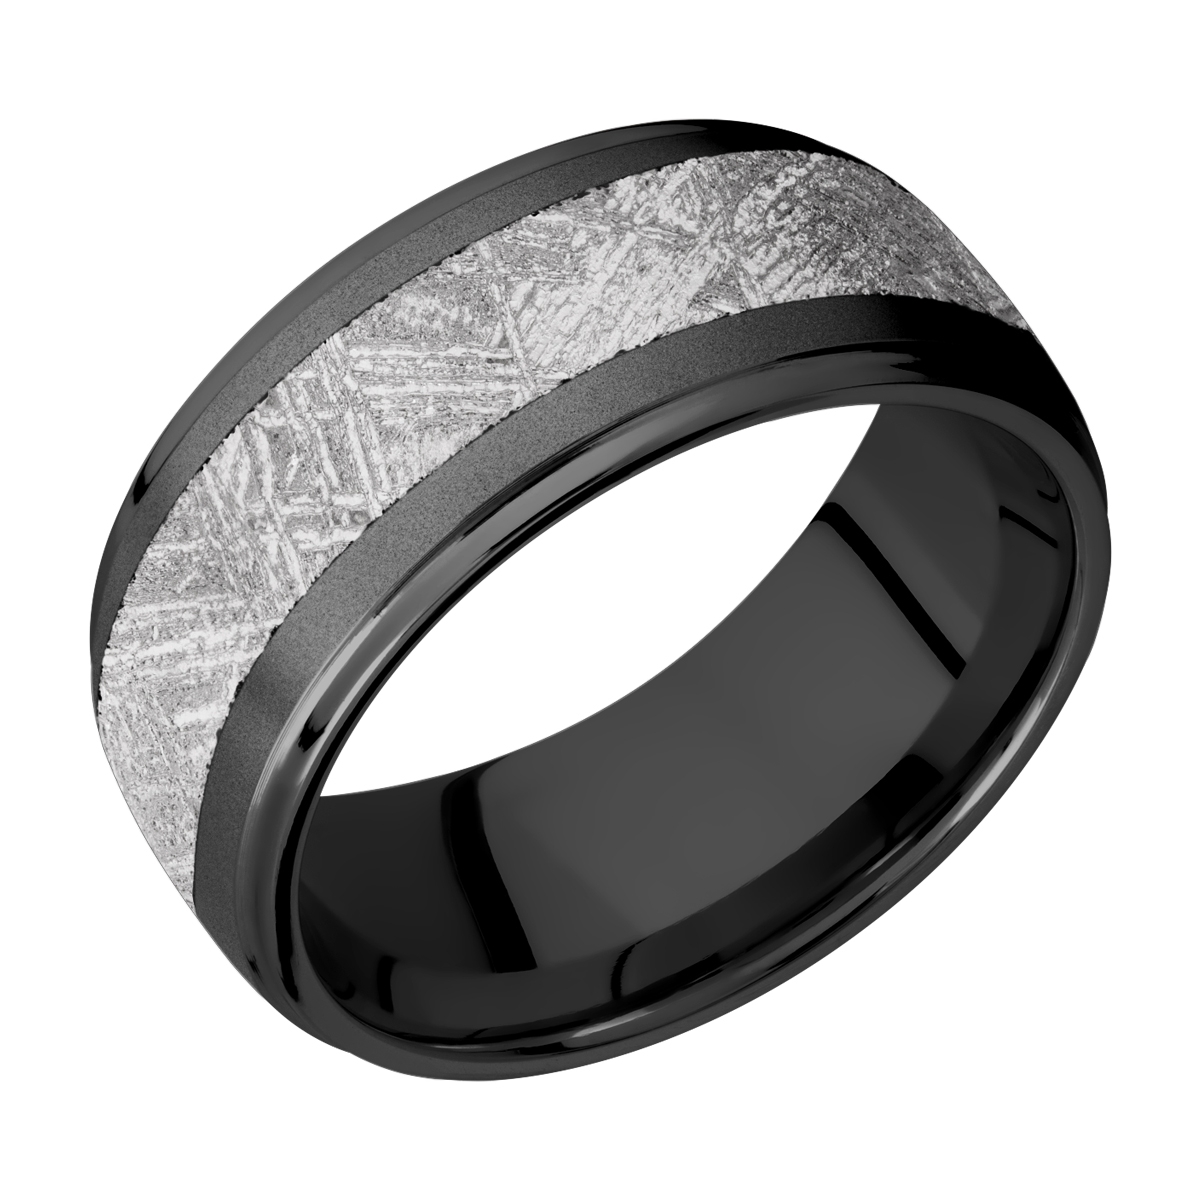 Lashbrook Z10DGE15/METEORITE Zirconium Wedding Ring or Band